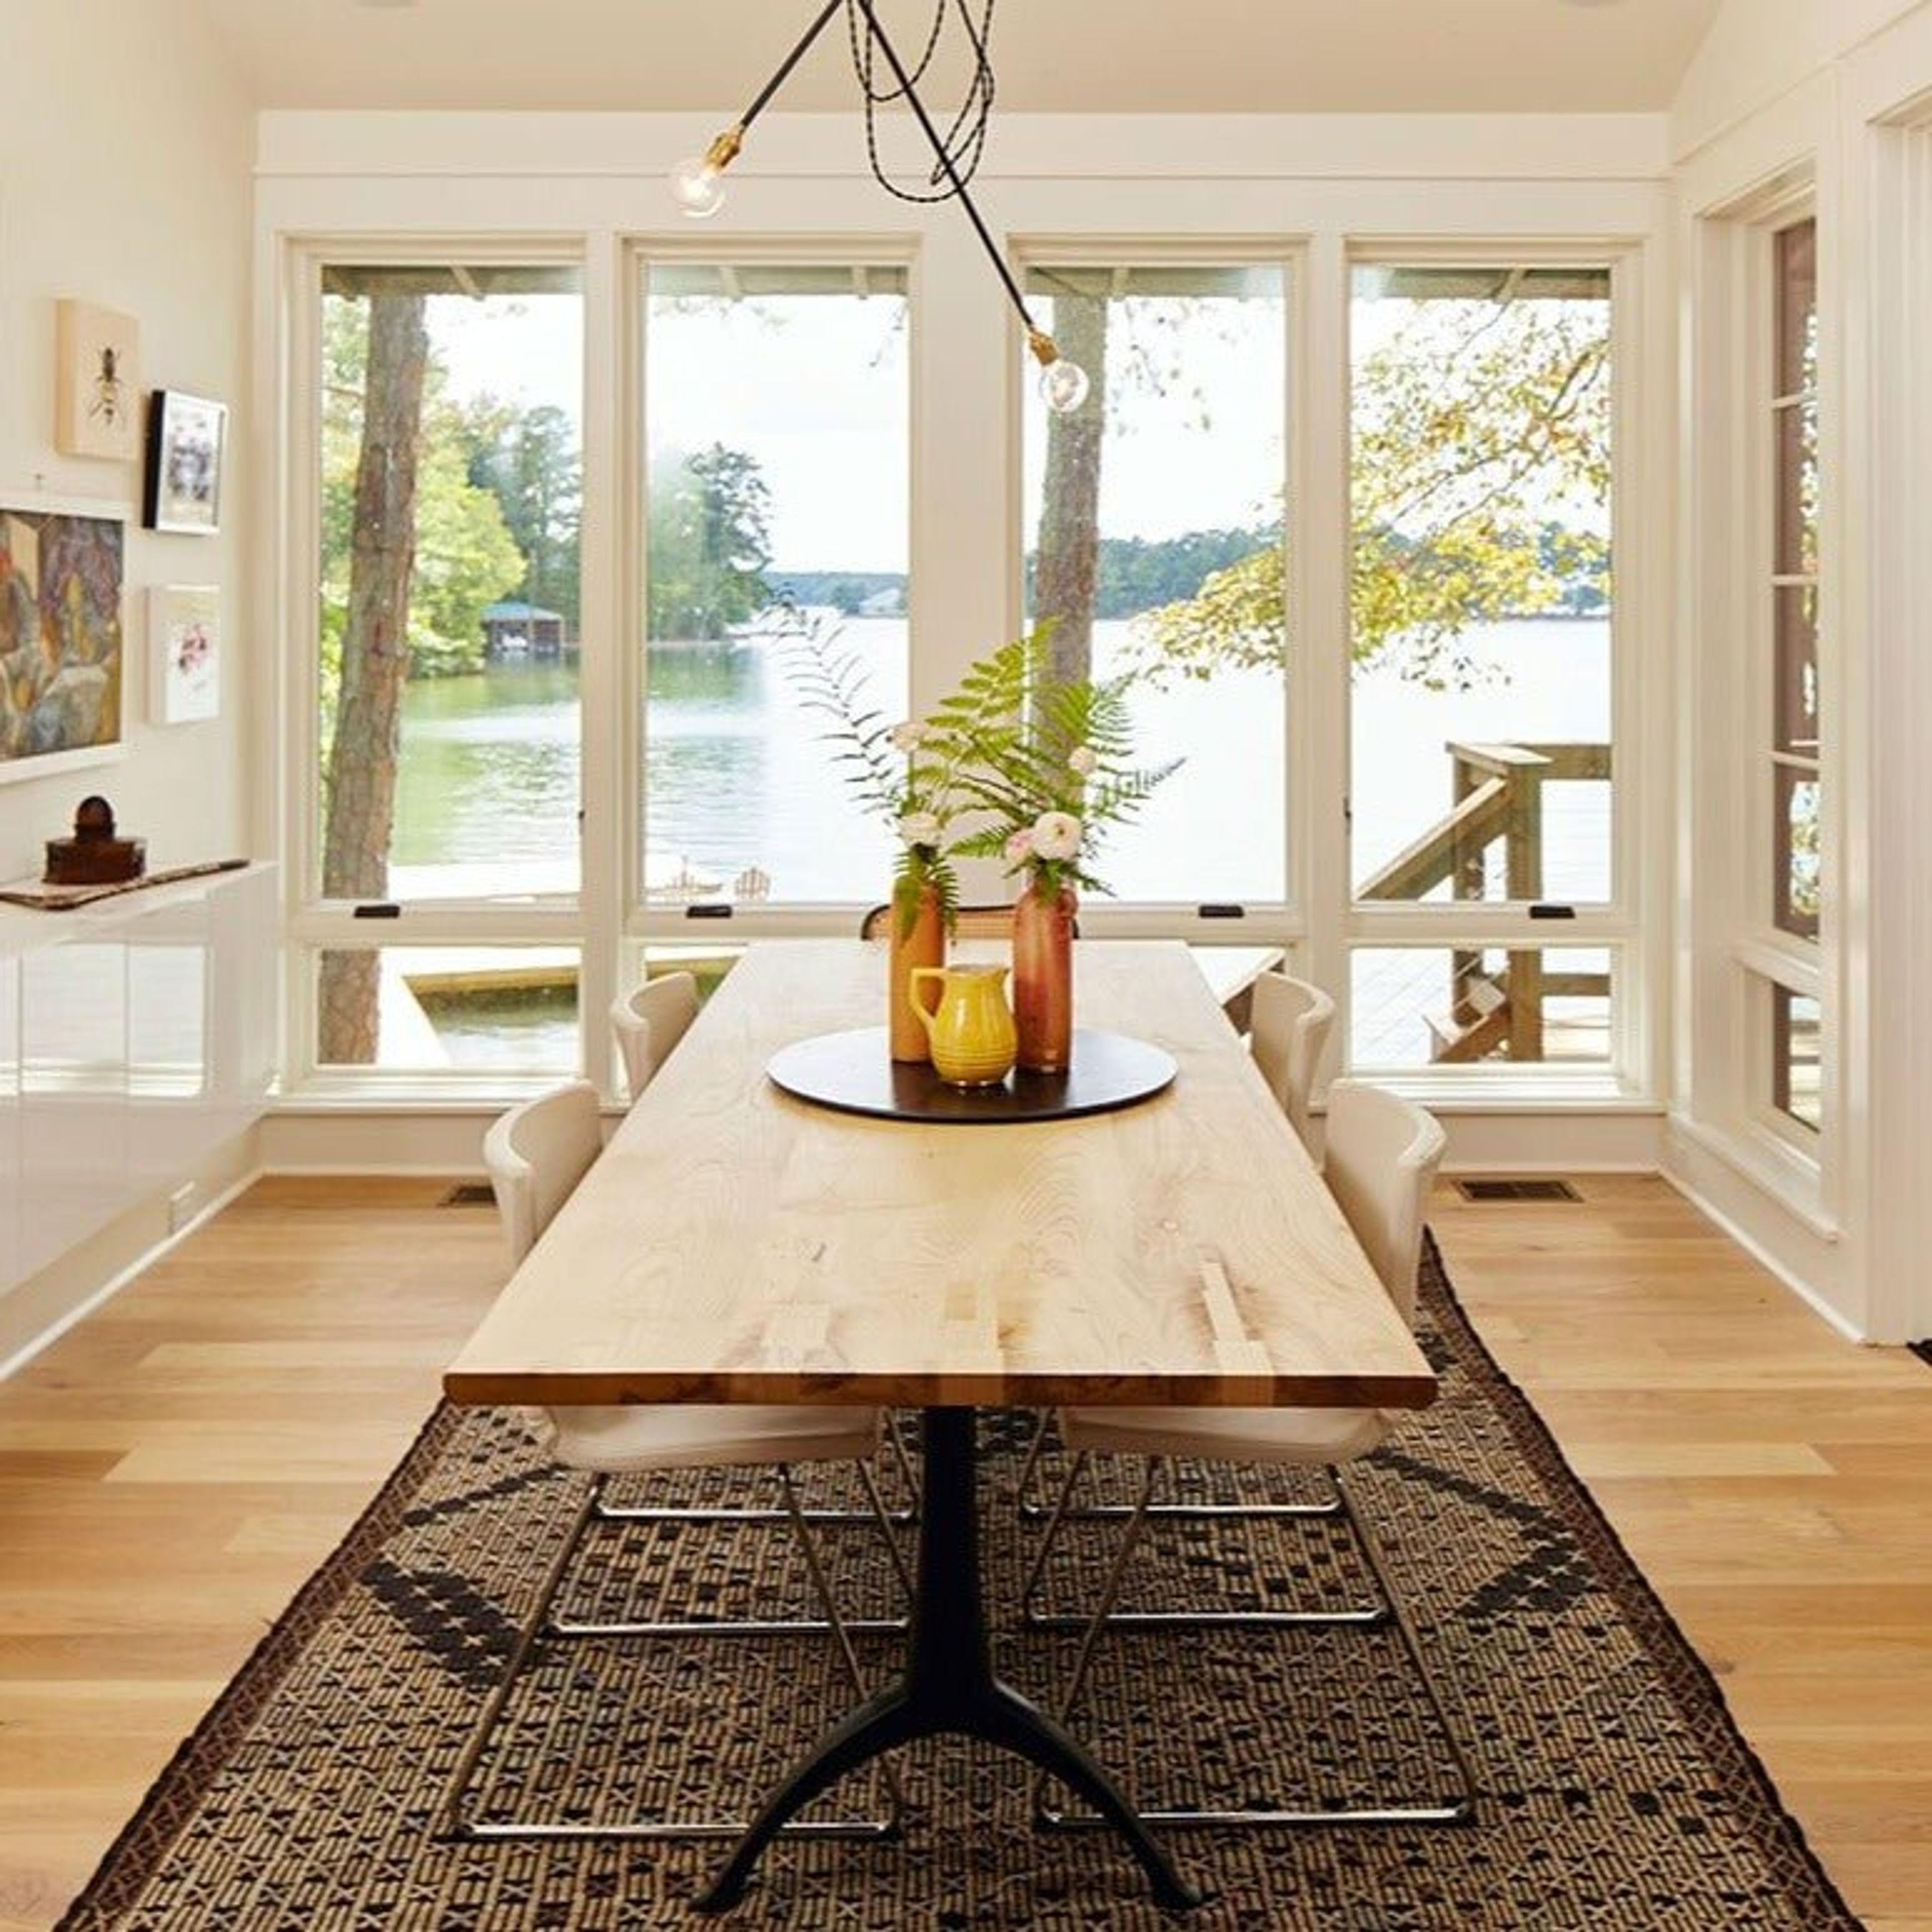 Modern Live Edge Wood Dining Table | Legacy Base Pedestal Table